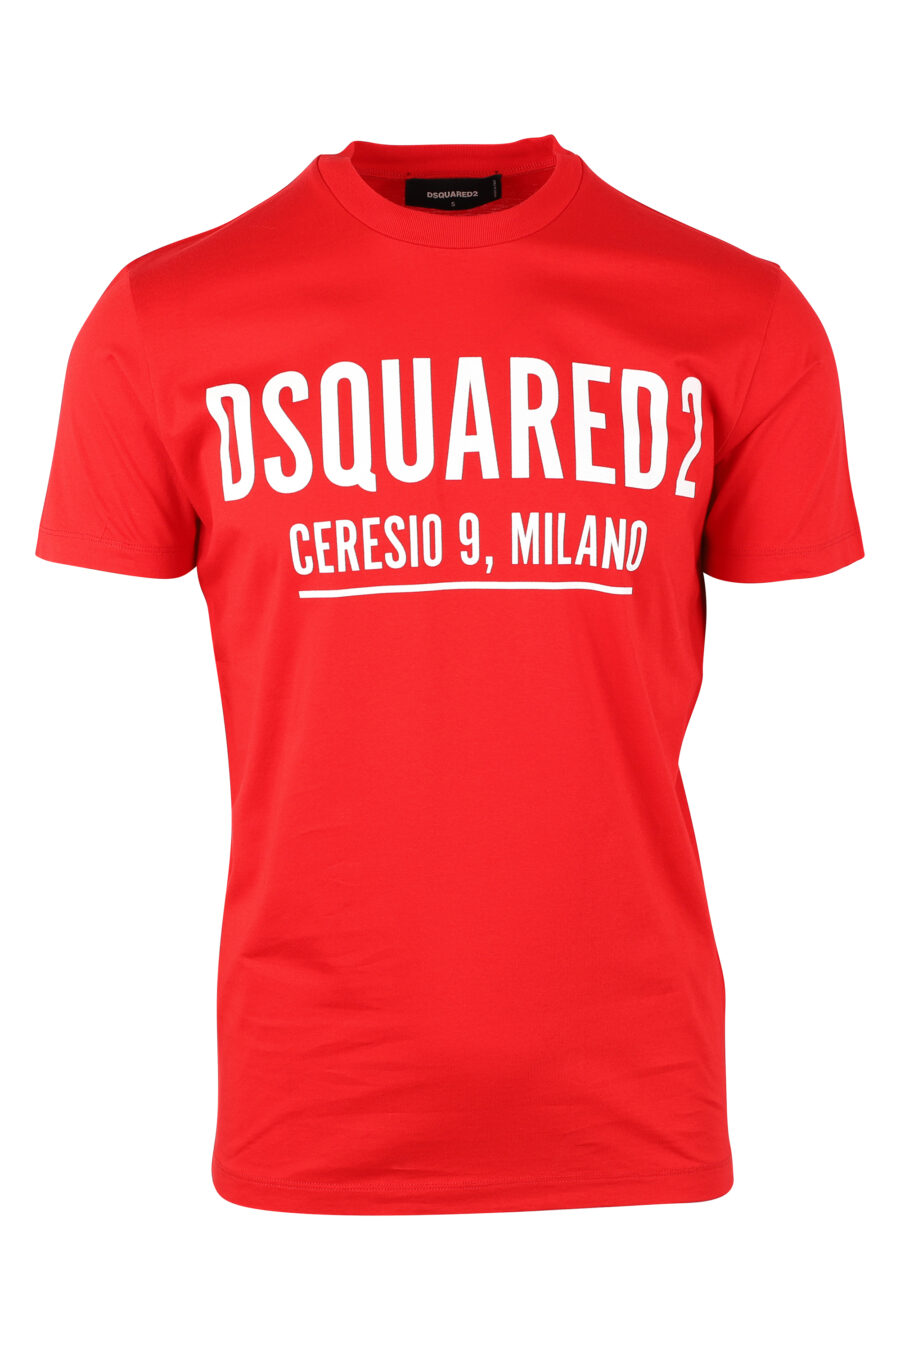 Camiseta roja con maxilogo "ceresio 9" - IMG 9750